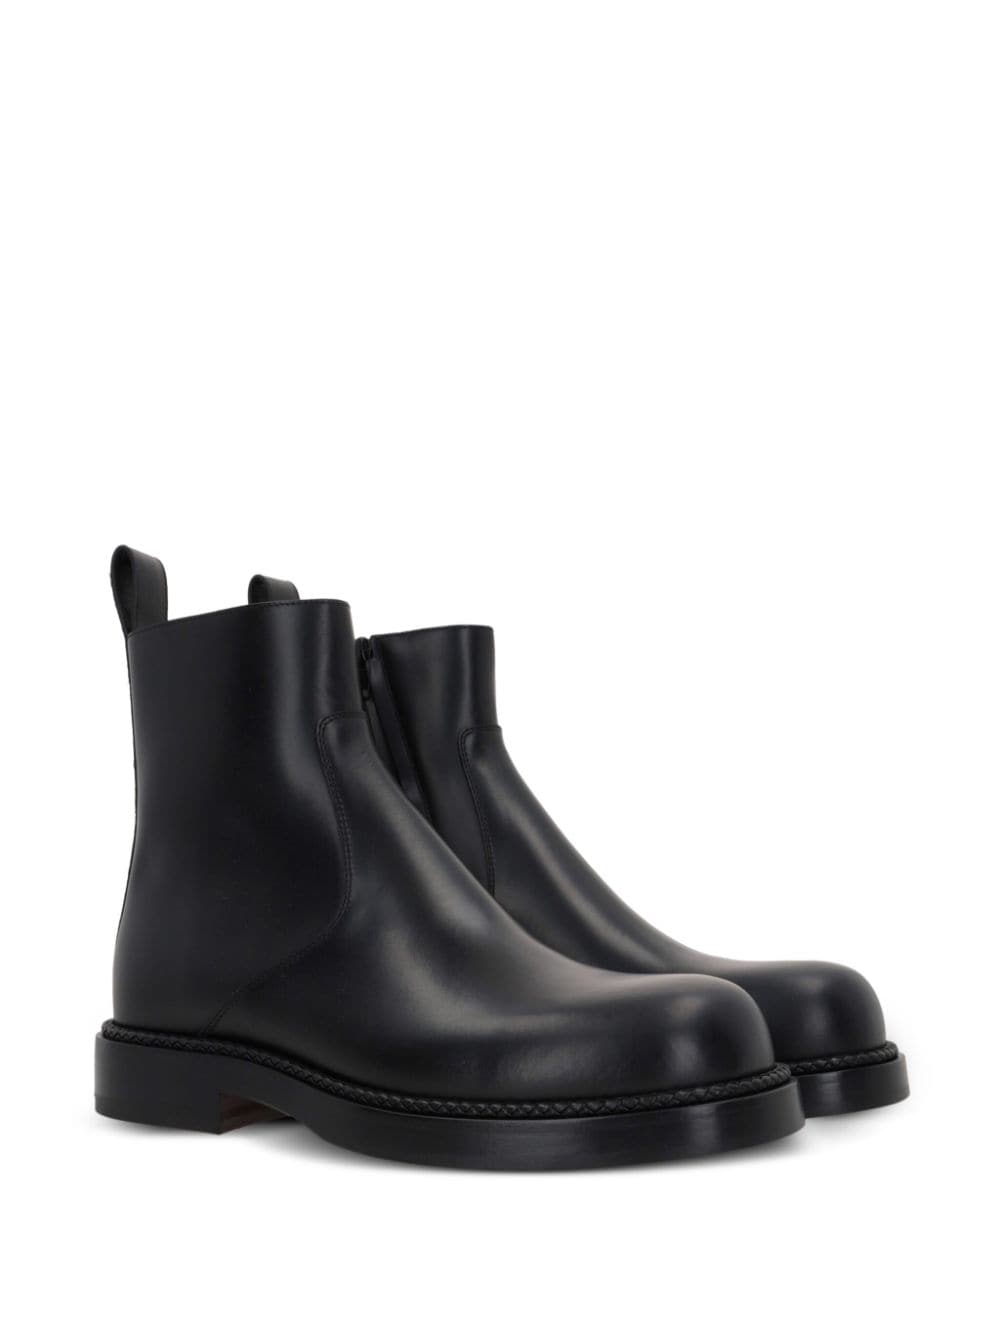 Bottega Veneta leather ankle boots - Zwart